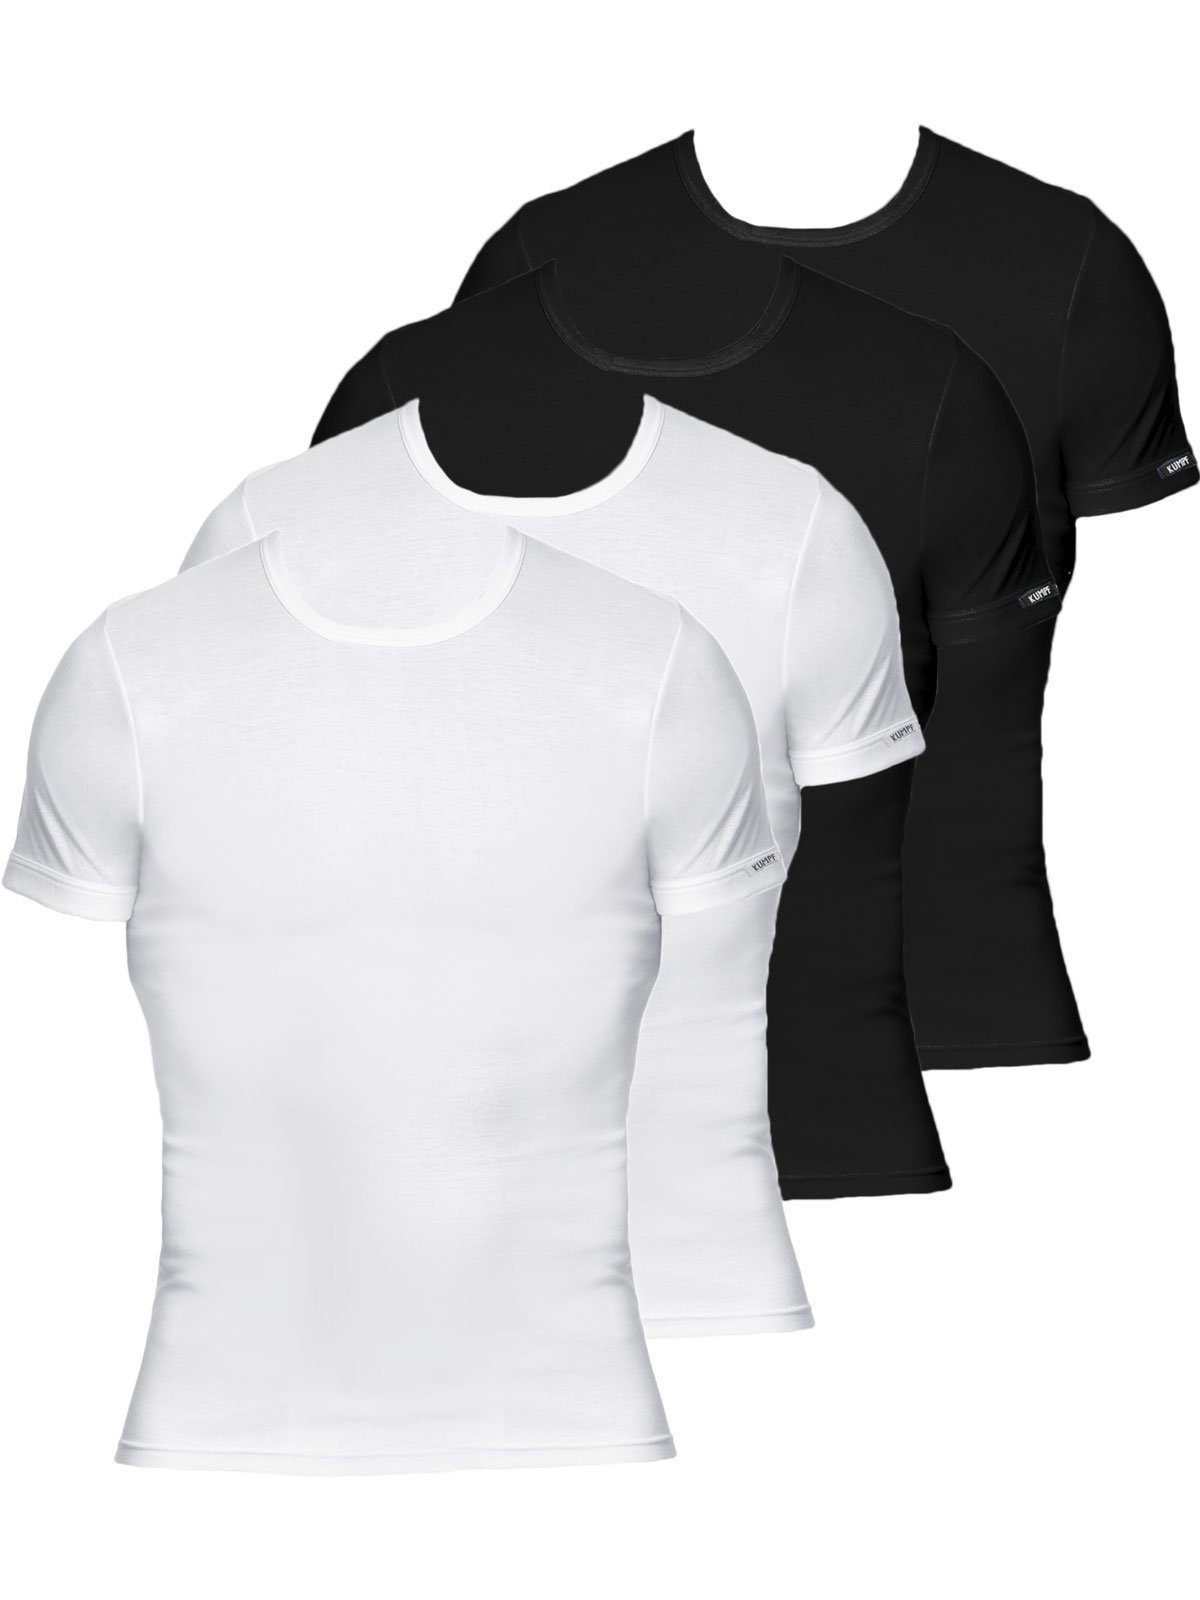 Sparpack Markenqualität Herren weiss 4er KUMPF T-Shirt Cotton 4-St) Unterziehshirt hohe Bio schwarz (Spar-Set,